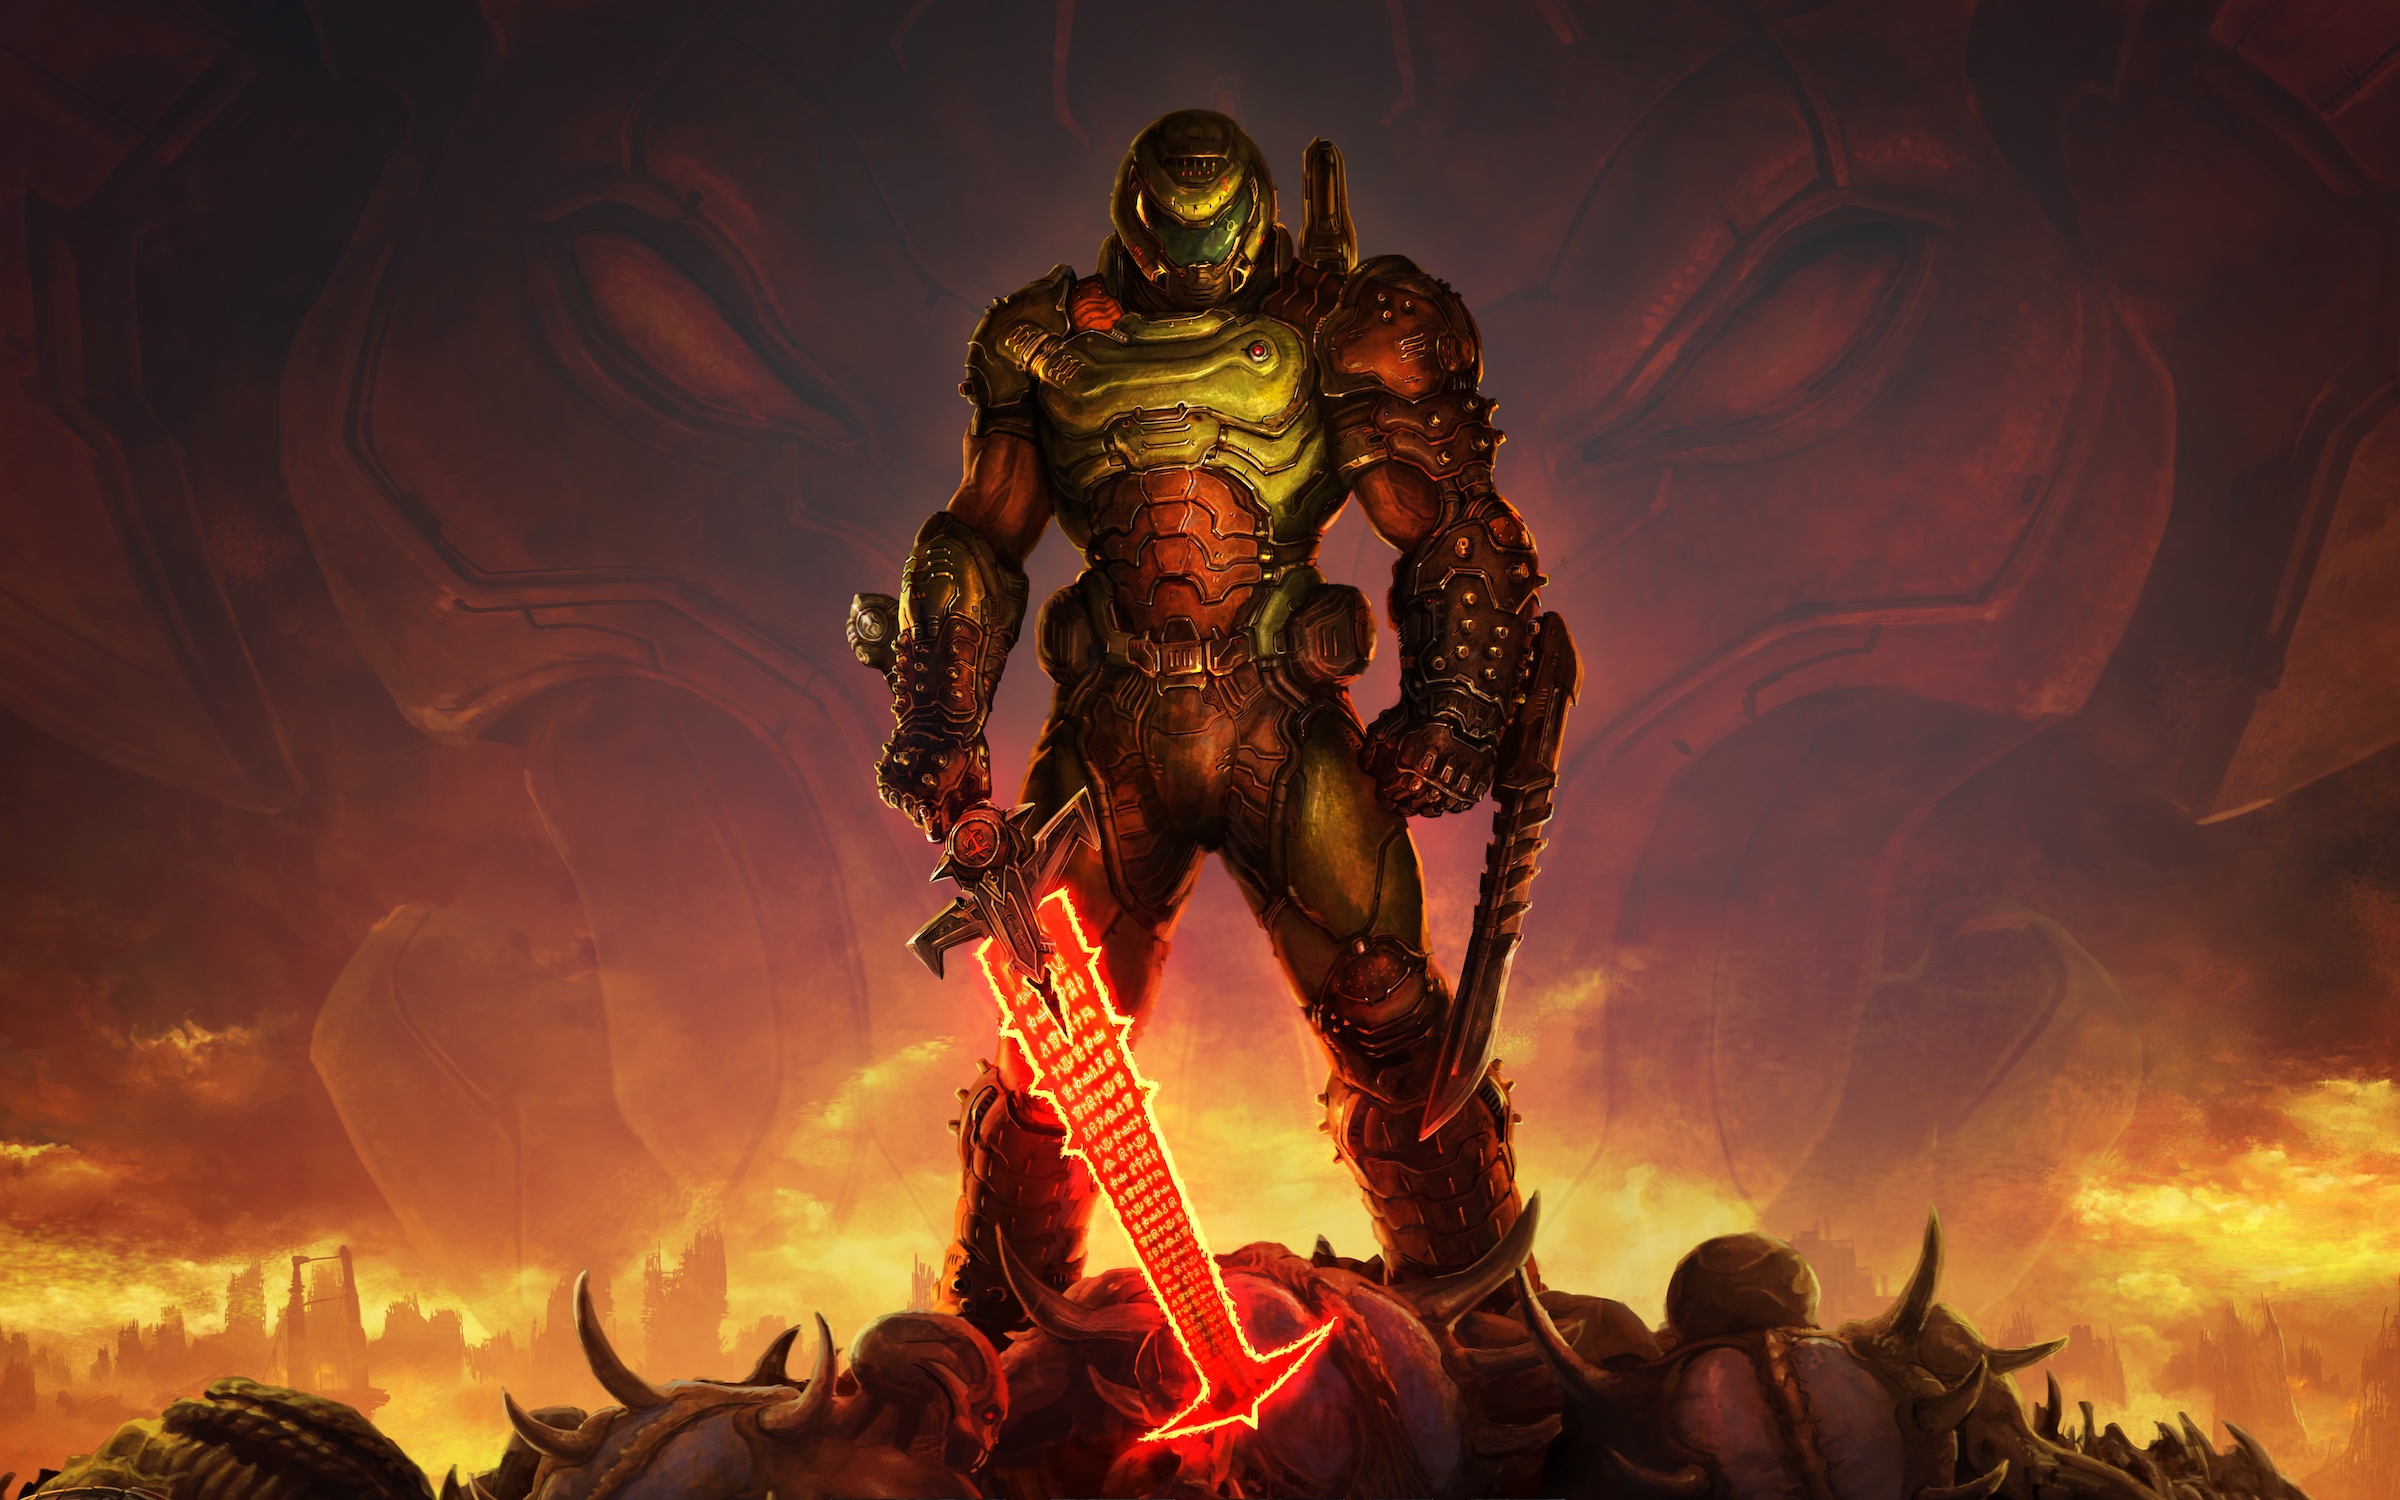 Doomguy stands atop a pile of demon corpses wielding a glowing sword in artwork from Doom Eternal